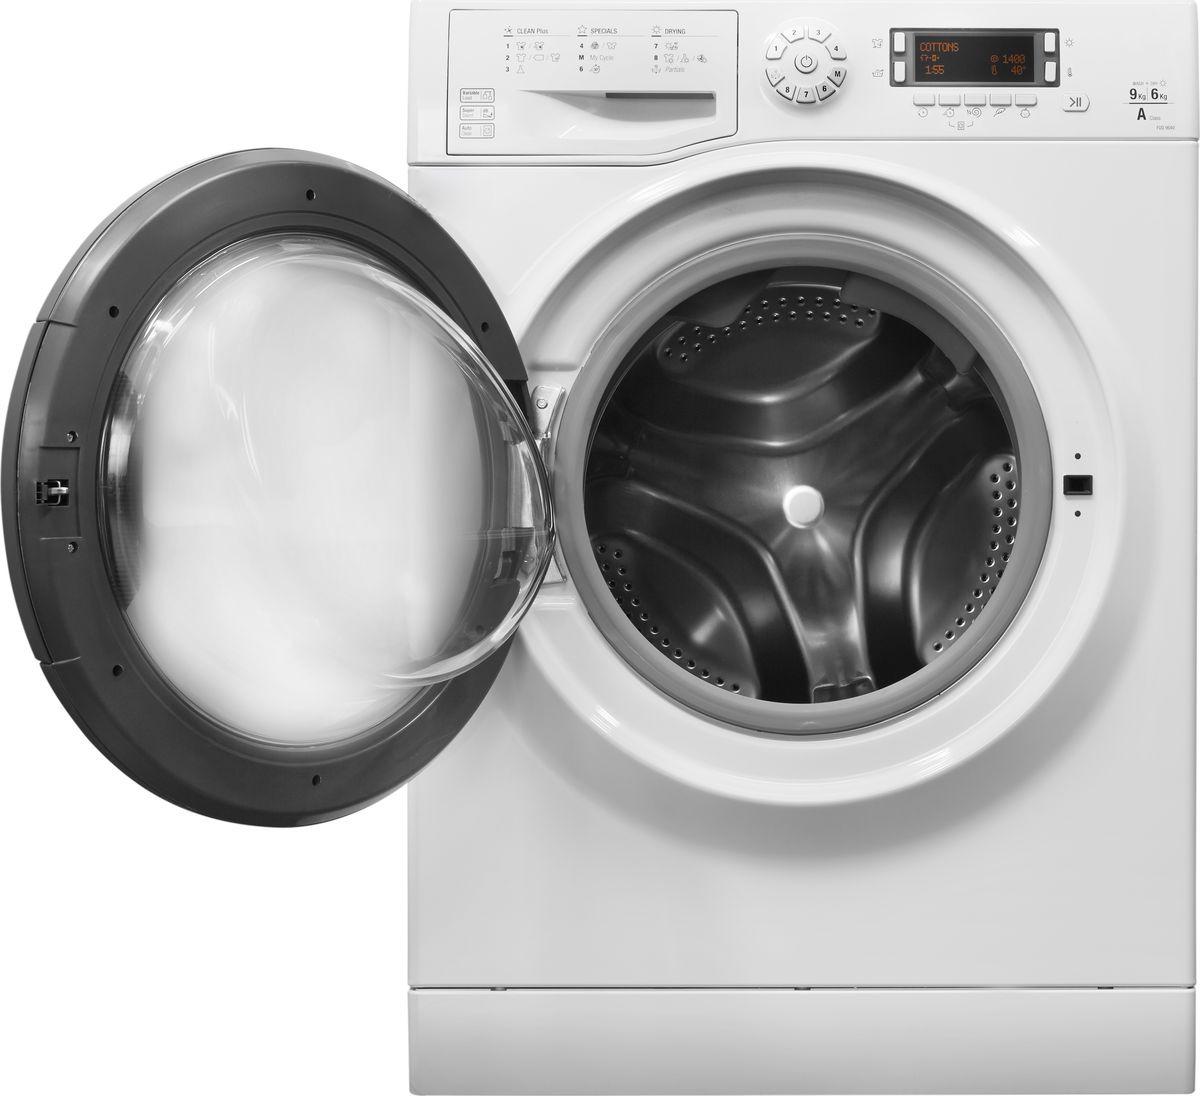 parity surely explain Κορυφαία 10 καλύτερα πλυντήρια και στεγνωτήρια - Κατάταξη 2020